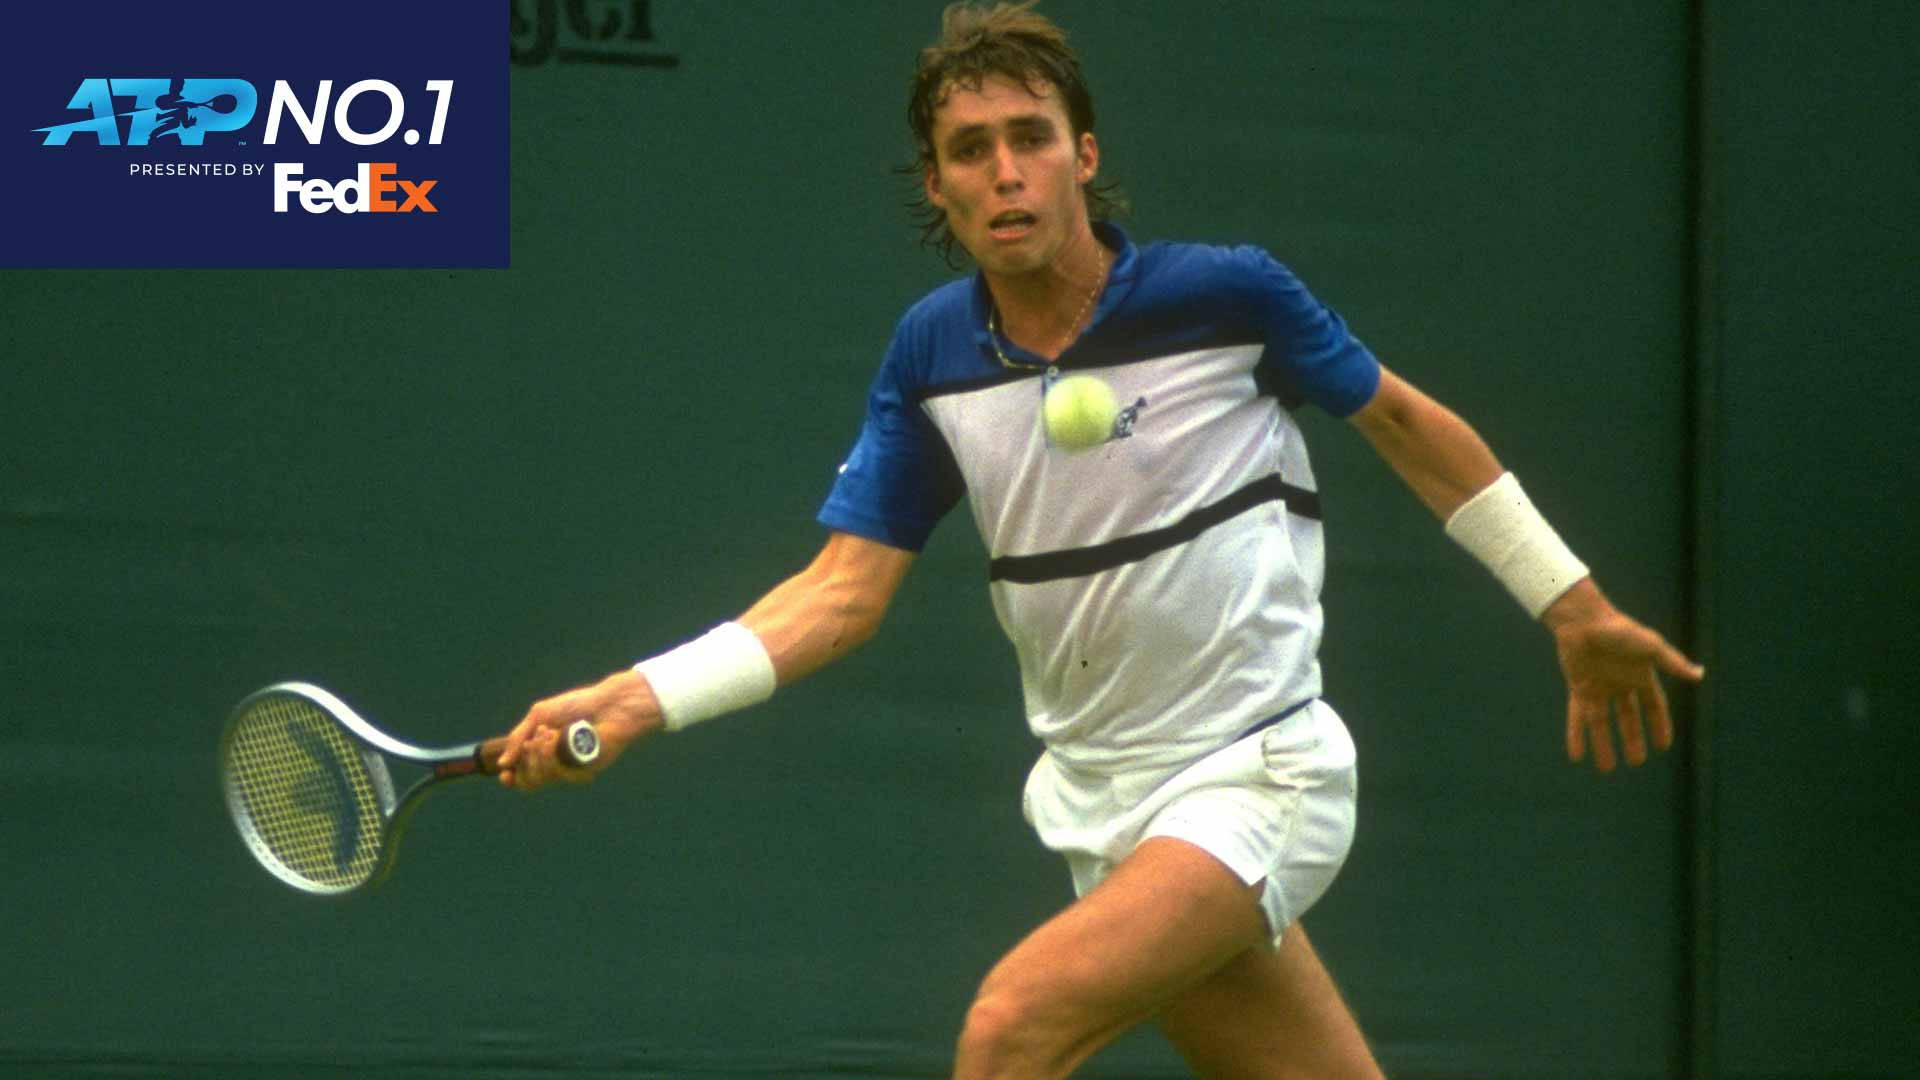 Ivan Lendl in action at an ATP tournament. Wallpaper